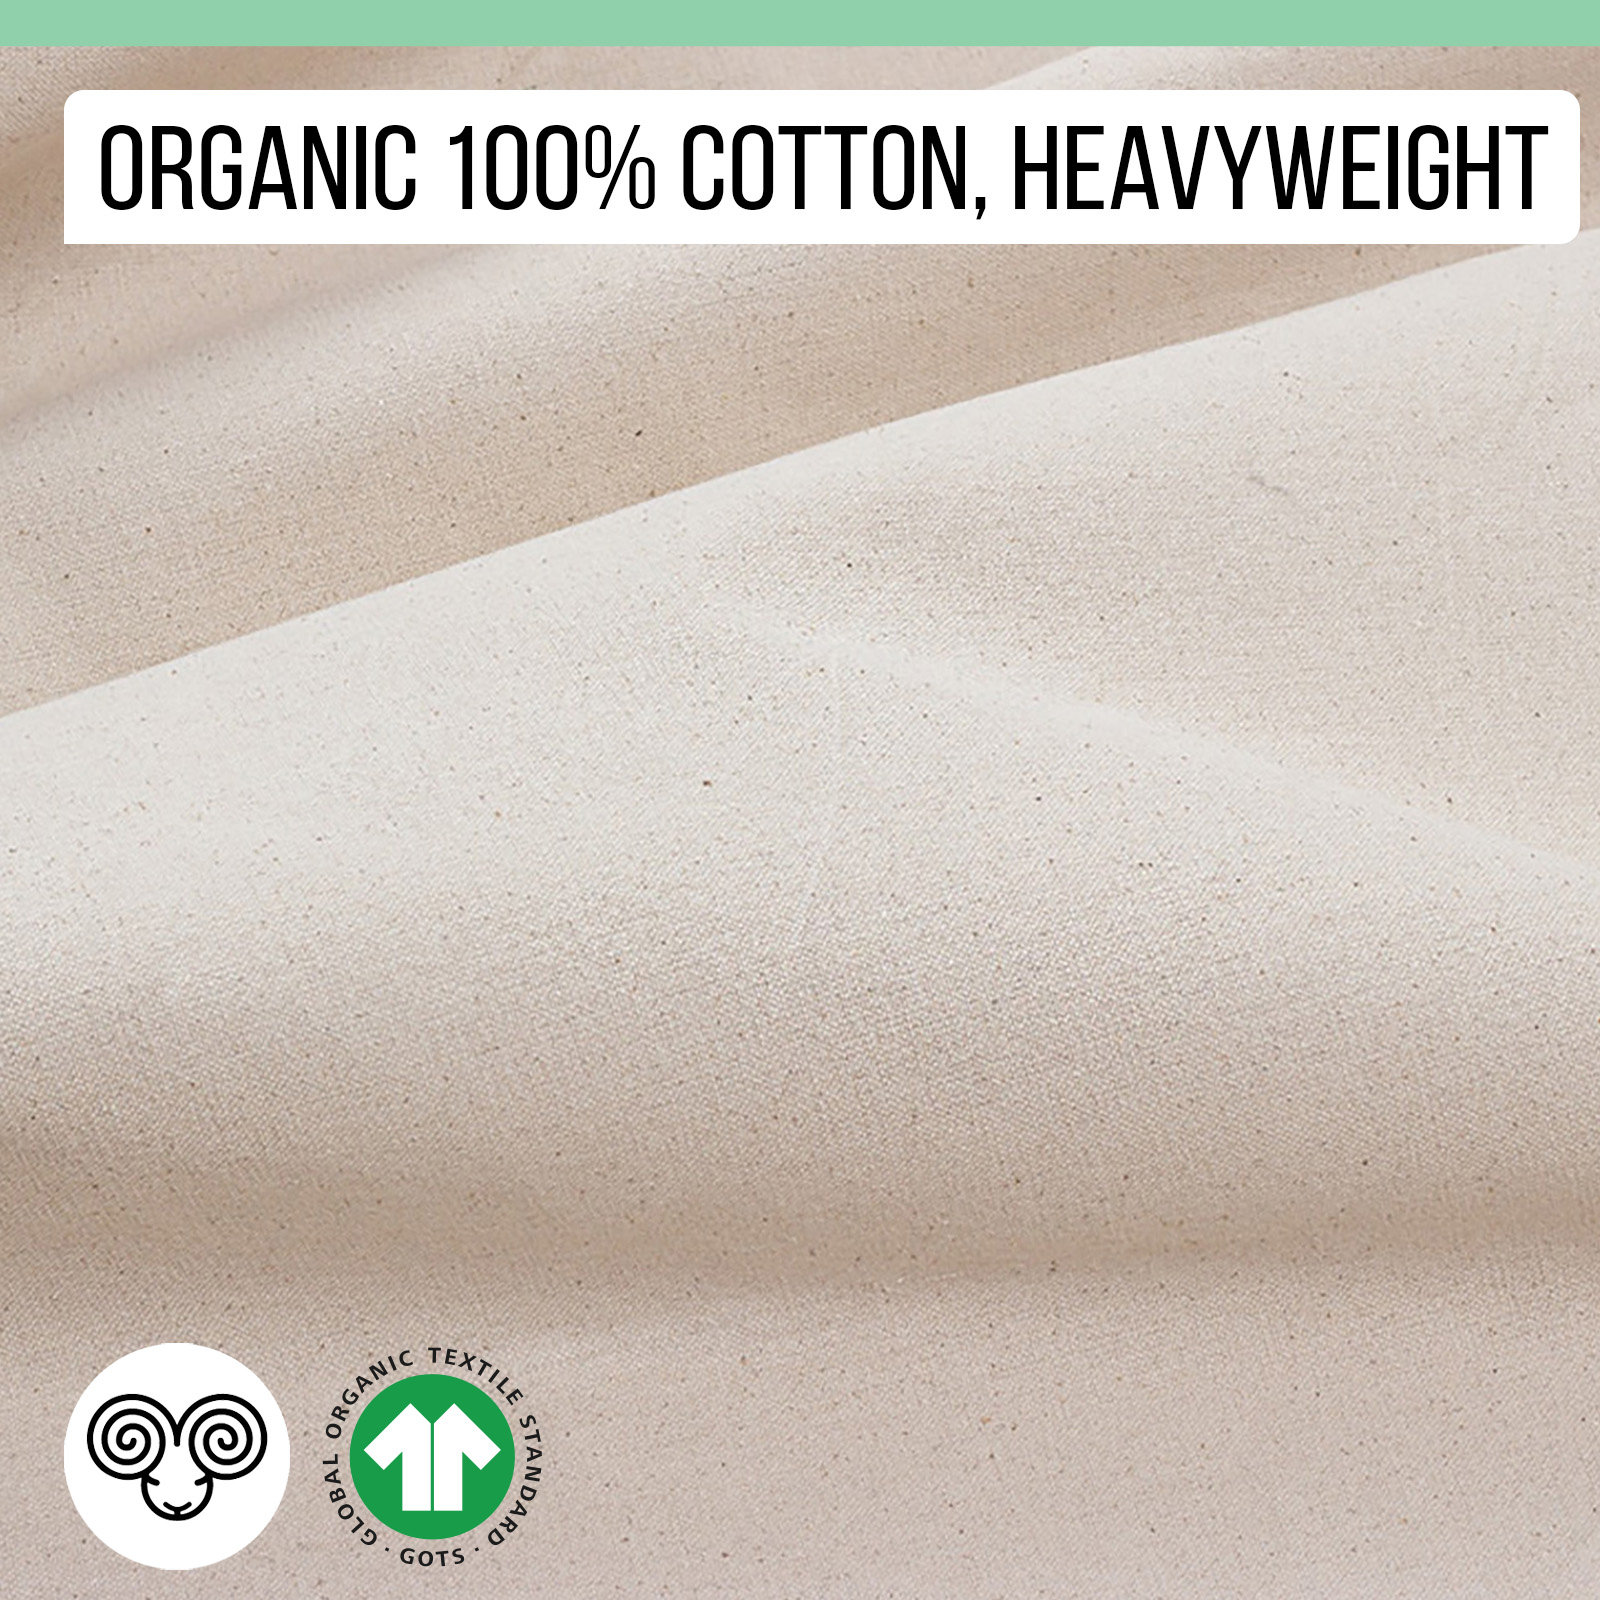 100% Cotton Fabric (heavyweight) / GOTS certified